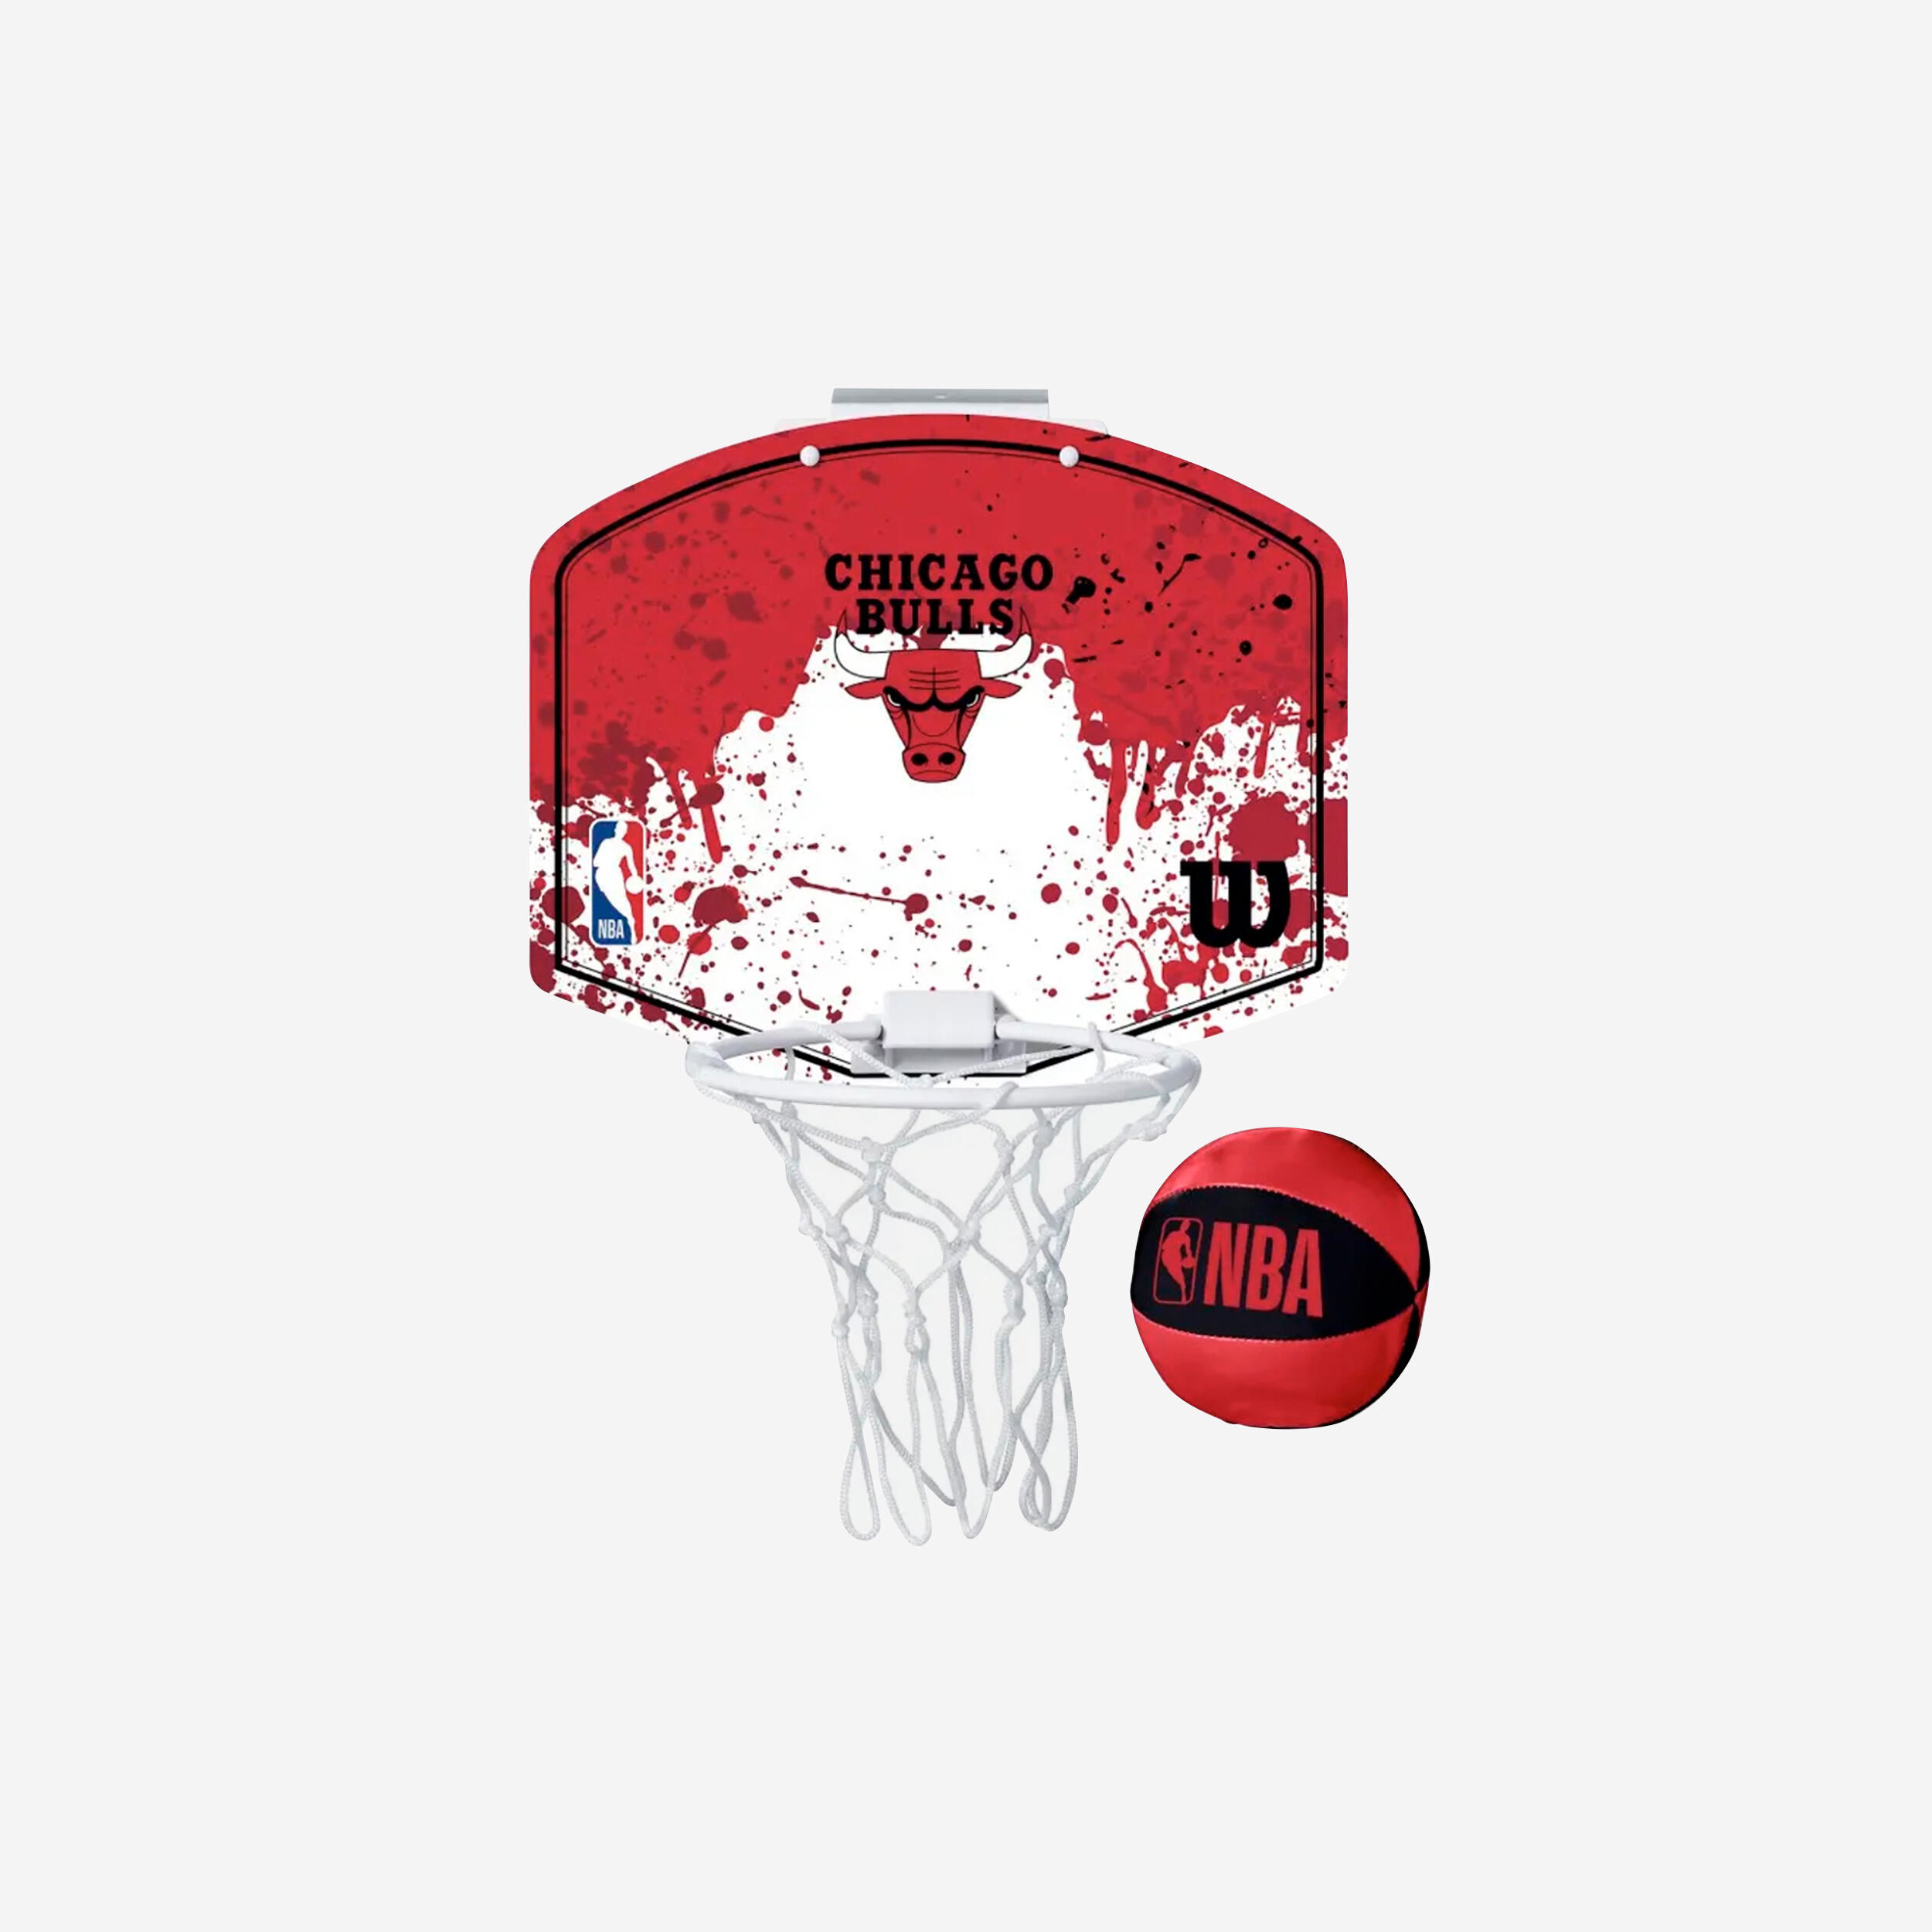 Mini-Basketballkorb NBA Chicago Bulls - Wilson rot